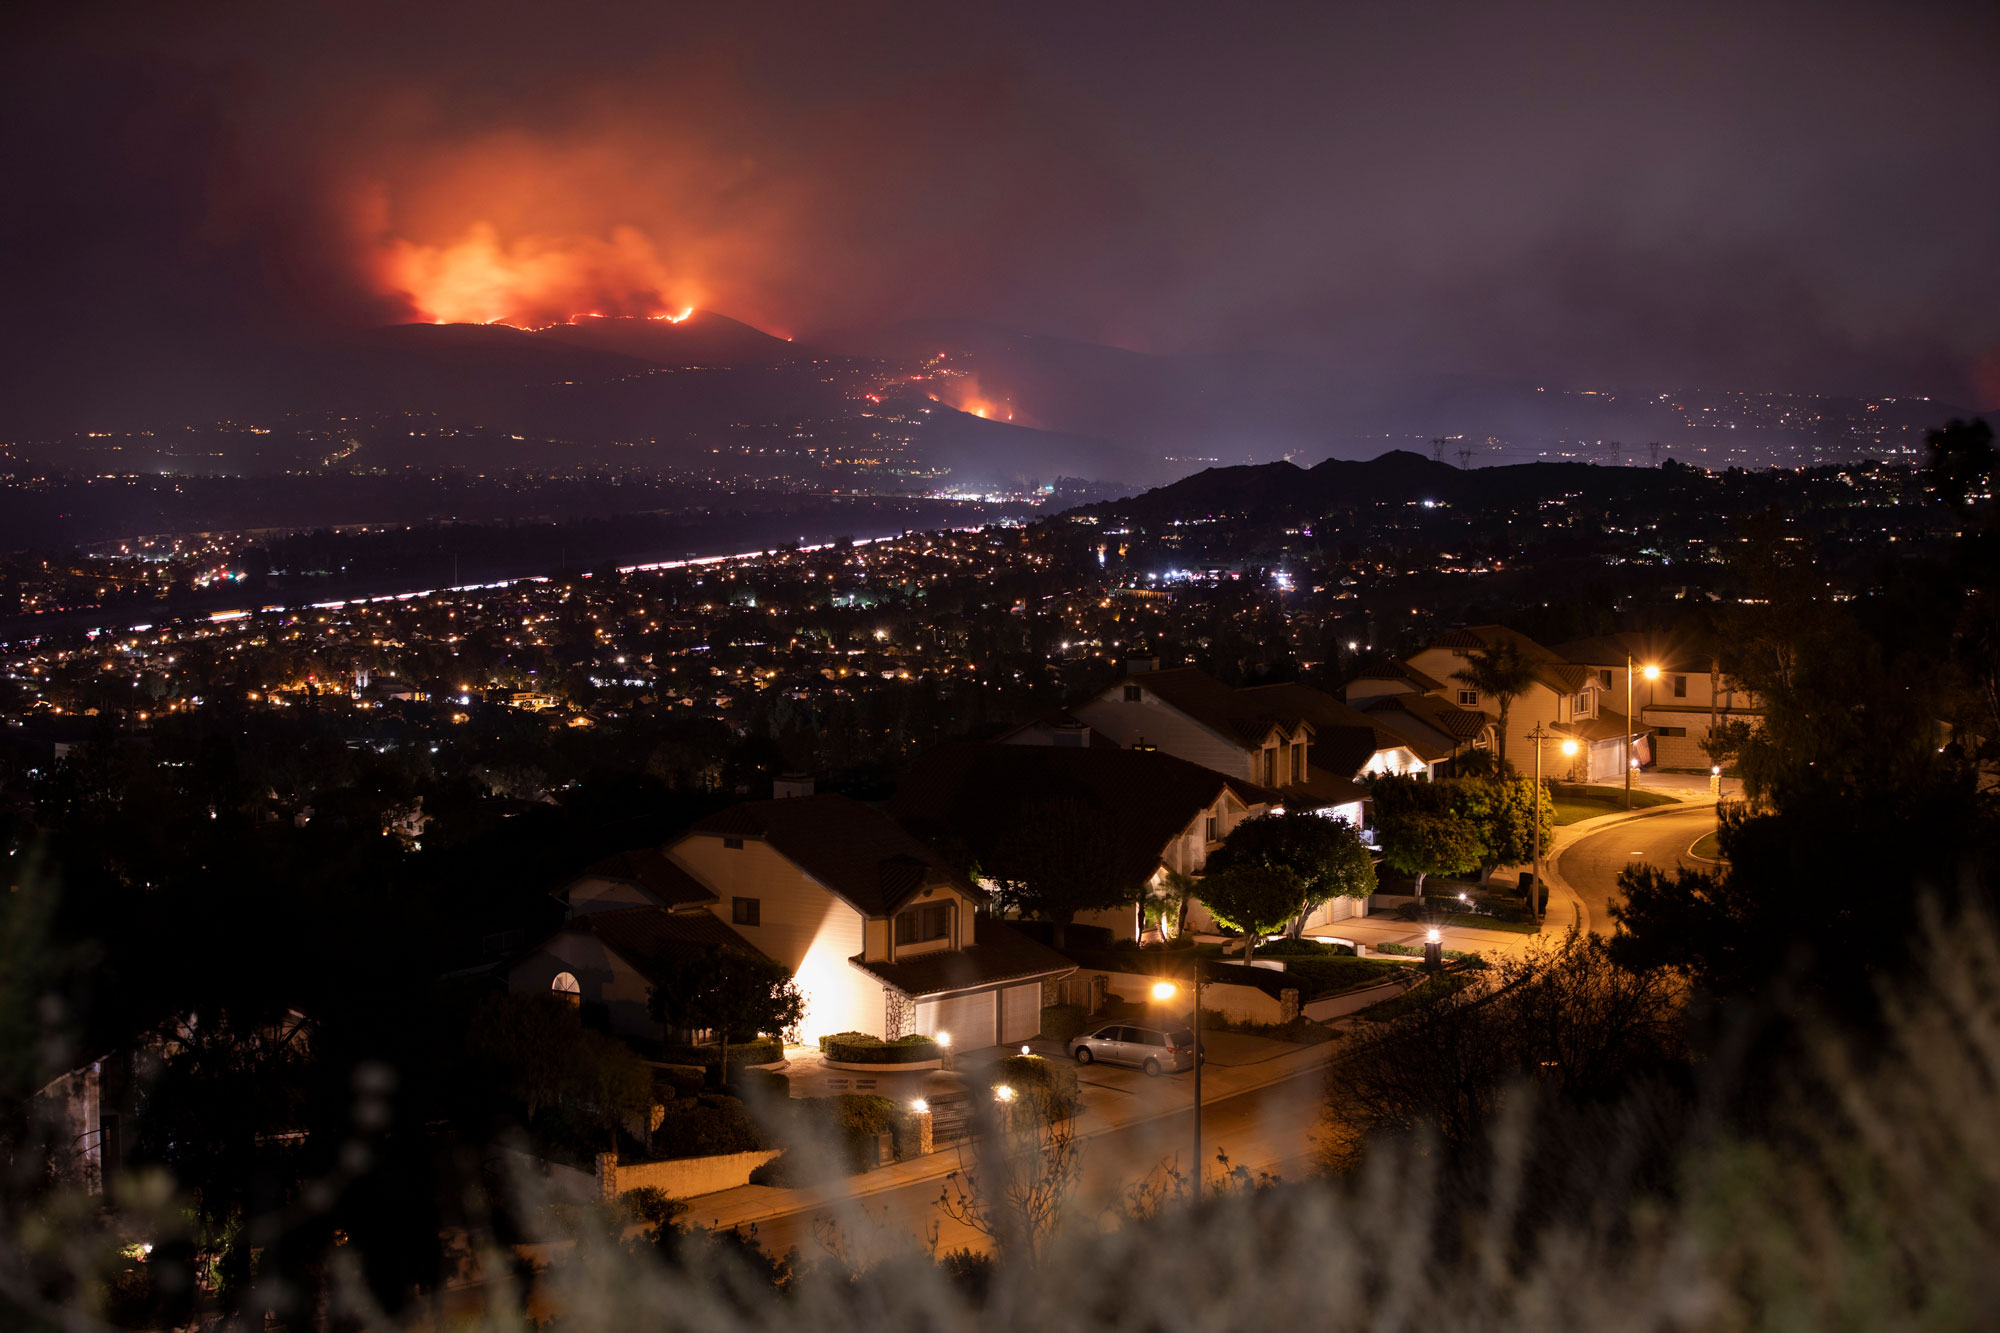 photo - Wildfire at Night, Threatening Neighborhood